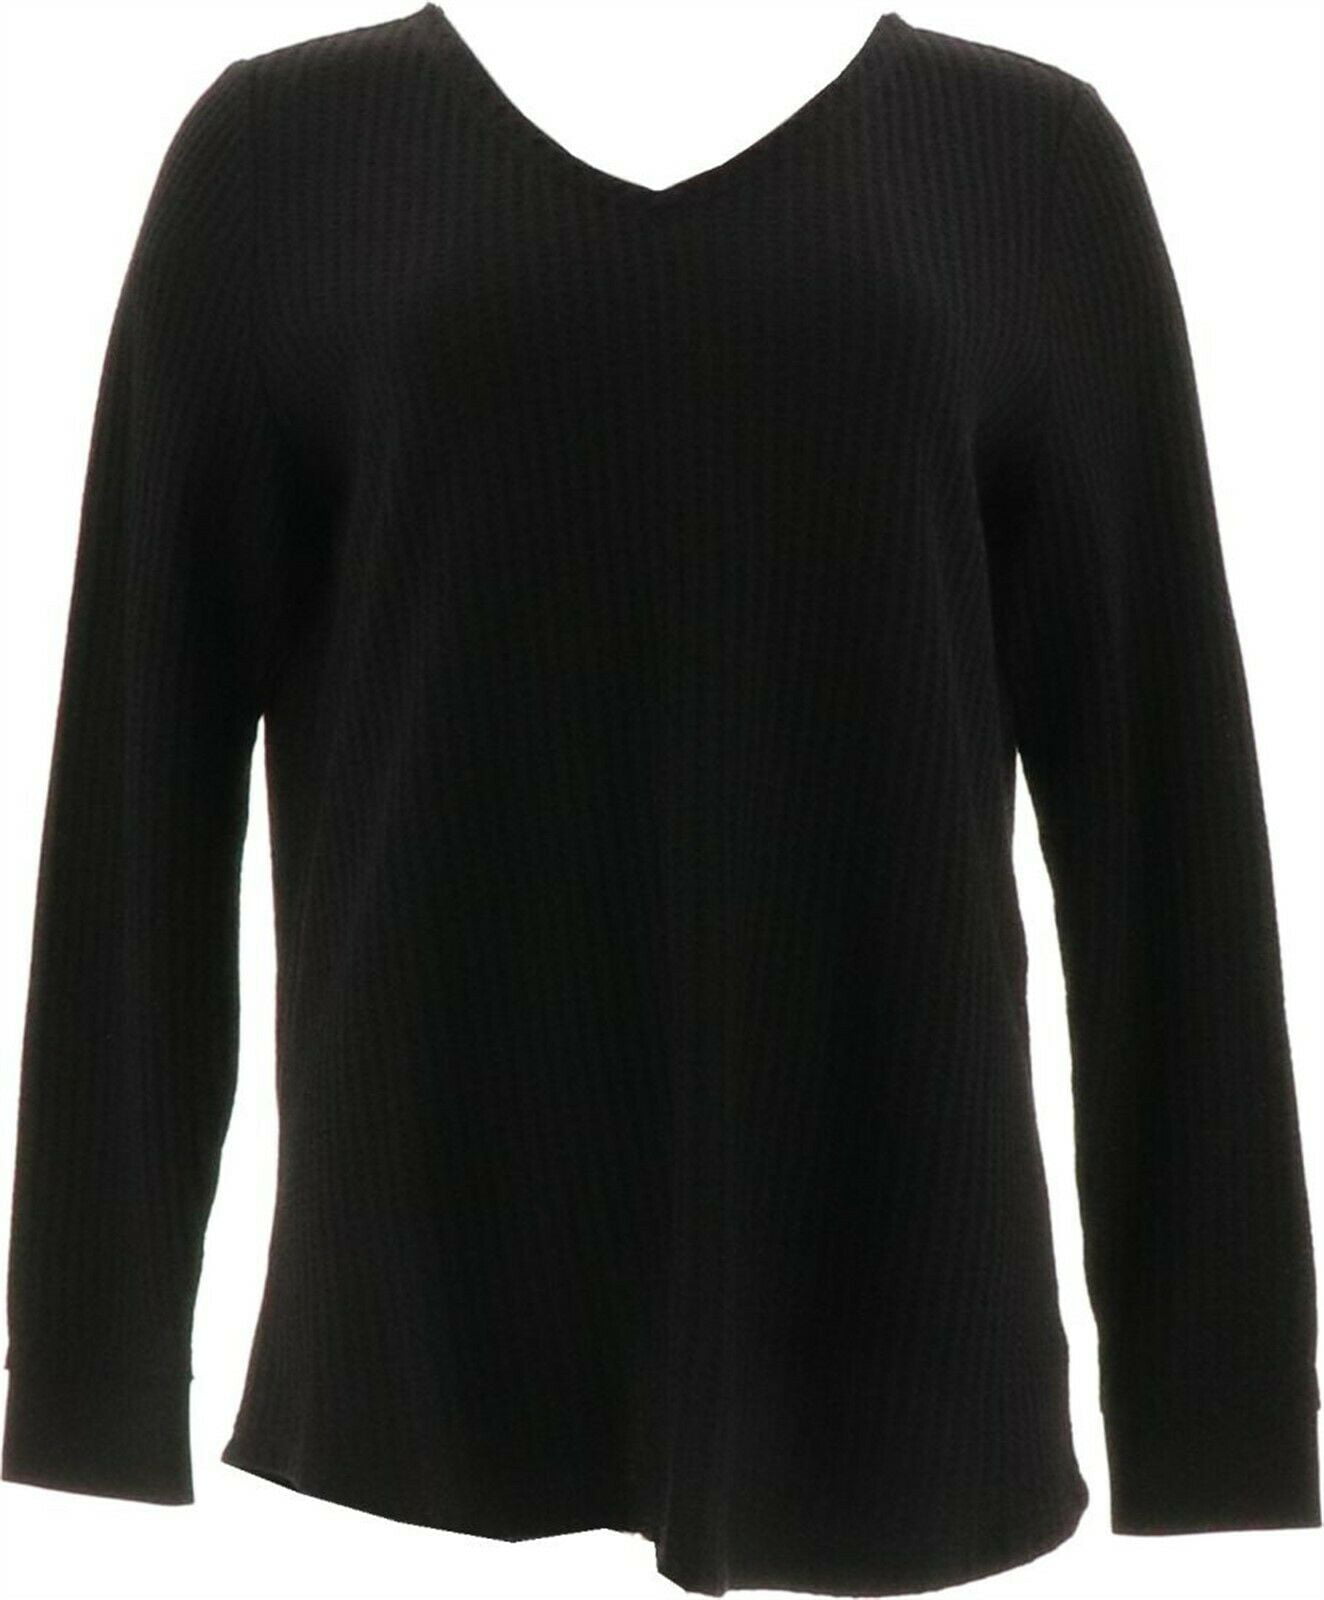 Belle Kim Gravel Black Knit Twist Hem Top Long-Sleeve T-Shirt New